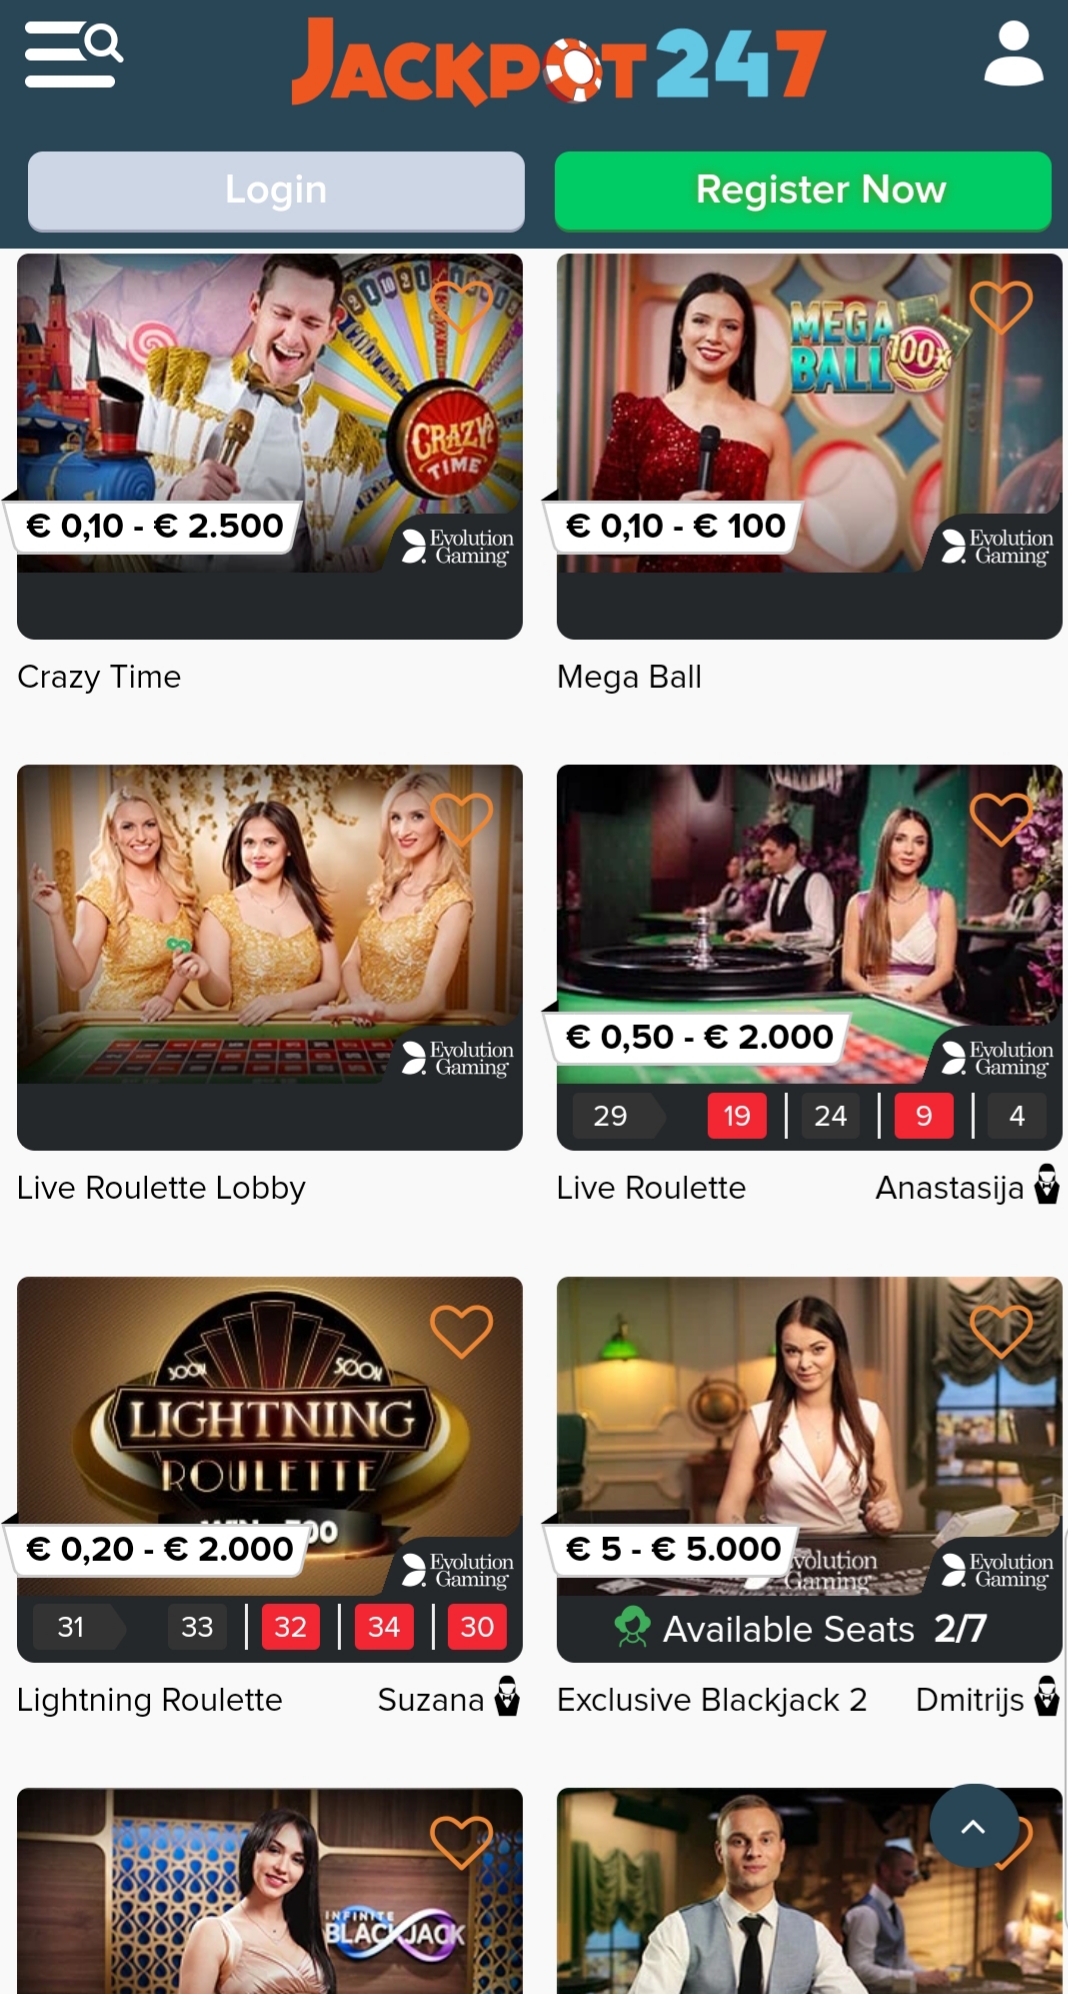 Jackpot247 Casino Mobile Live Dealer Games Review